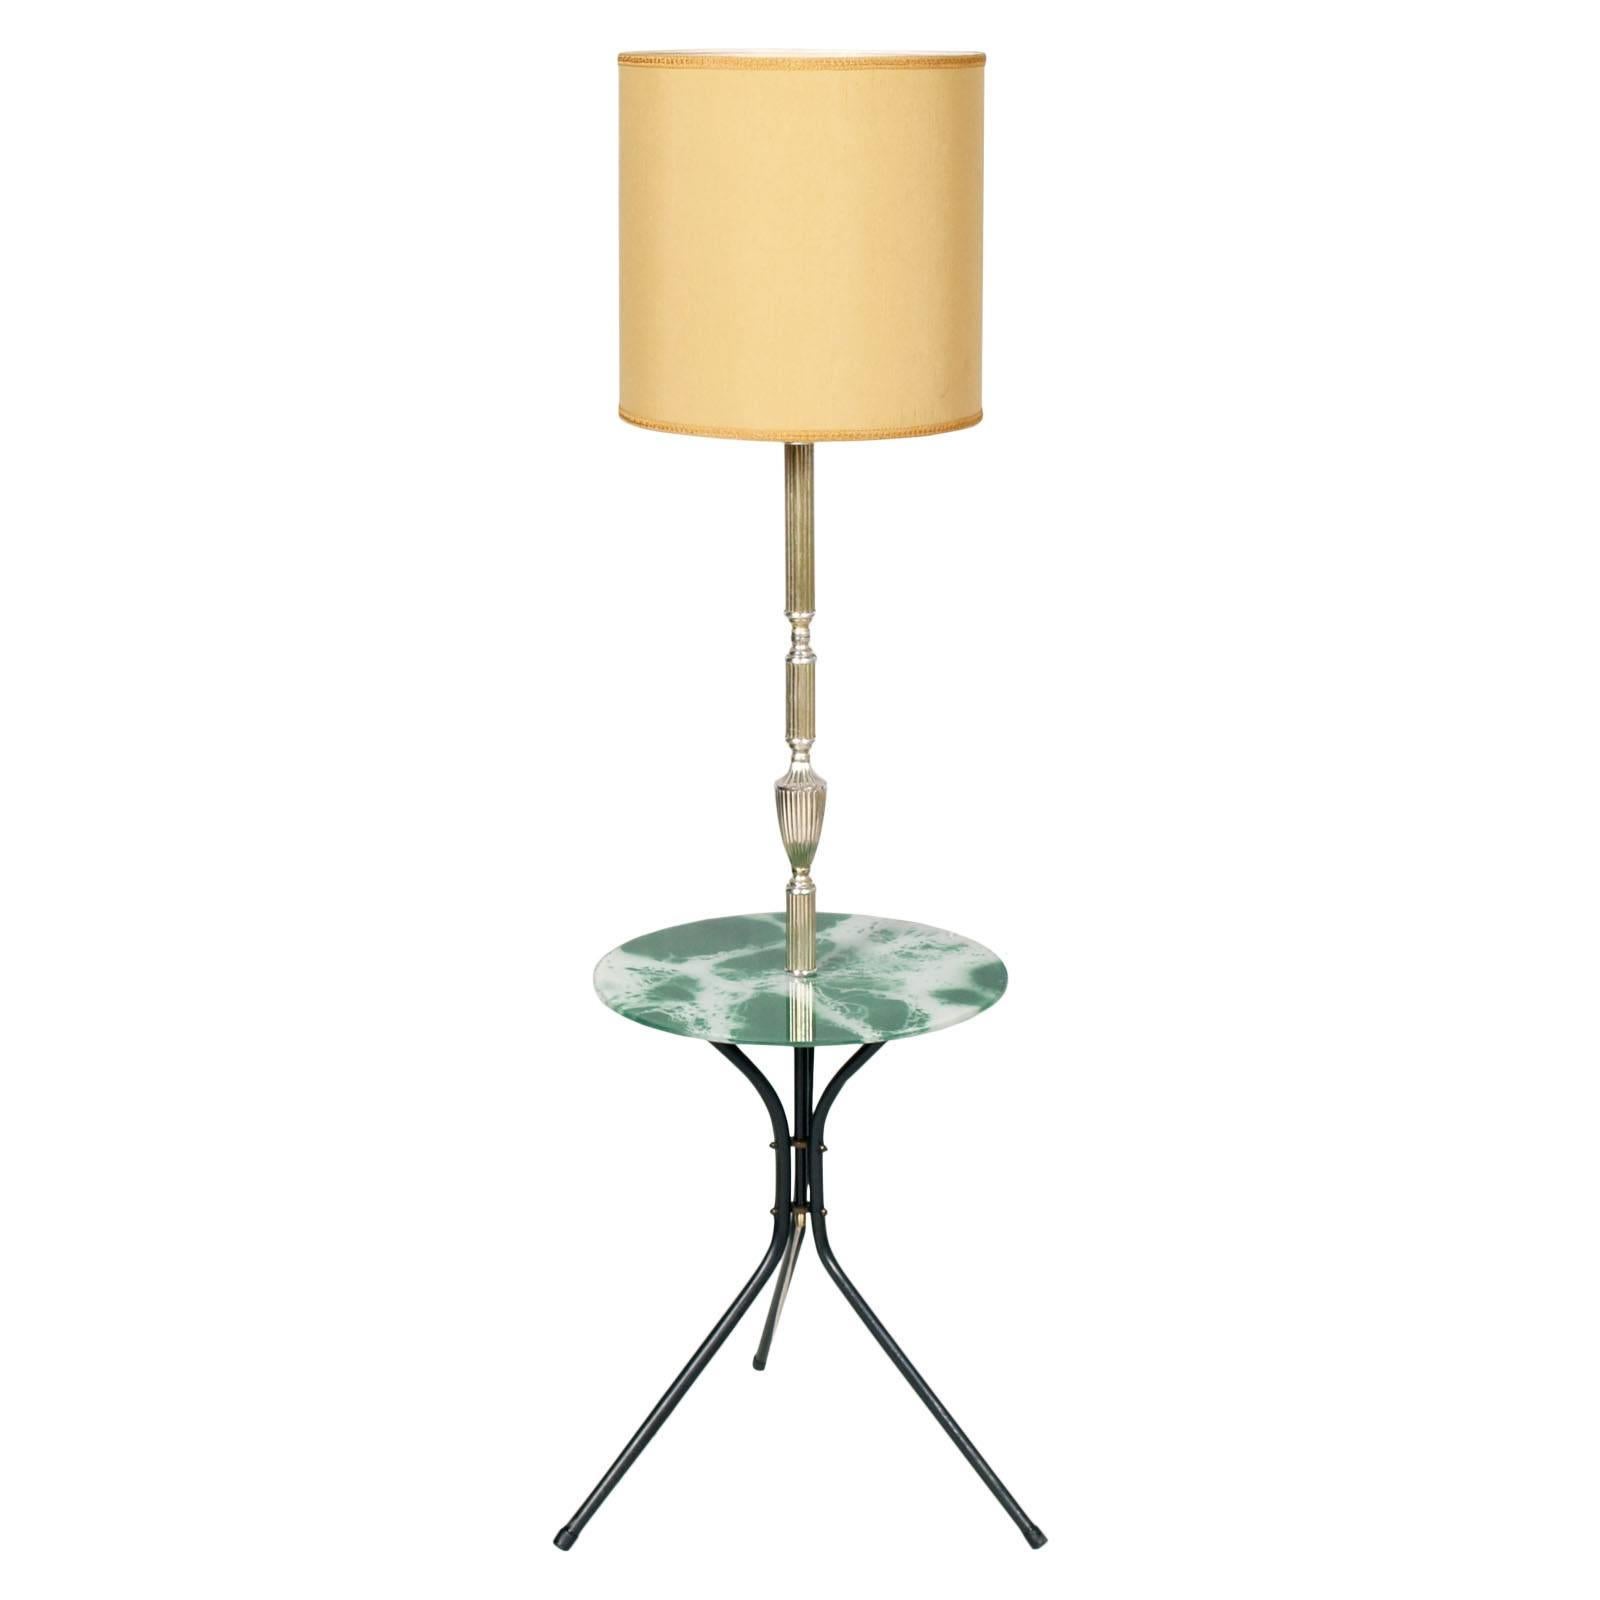 Art Deco Mid-Century Modern Tripod Floor Lamp with Coffee Table Gio Ponti Style